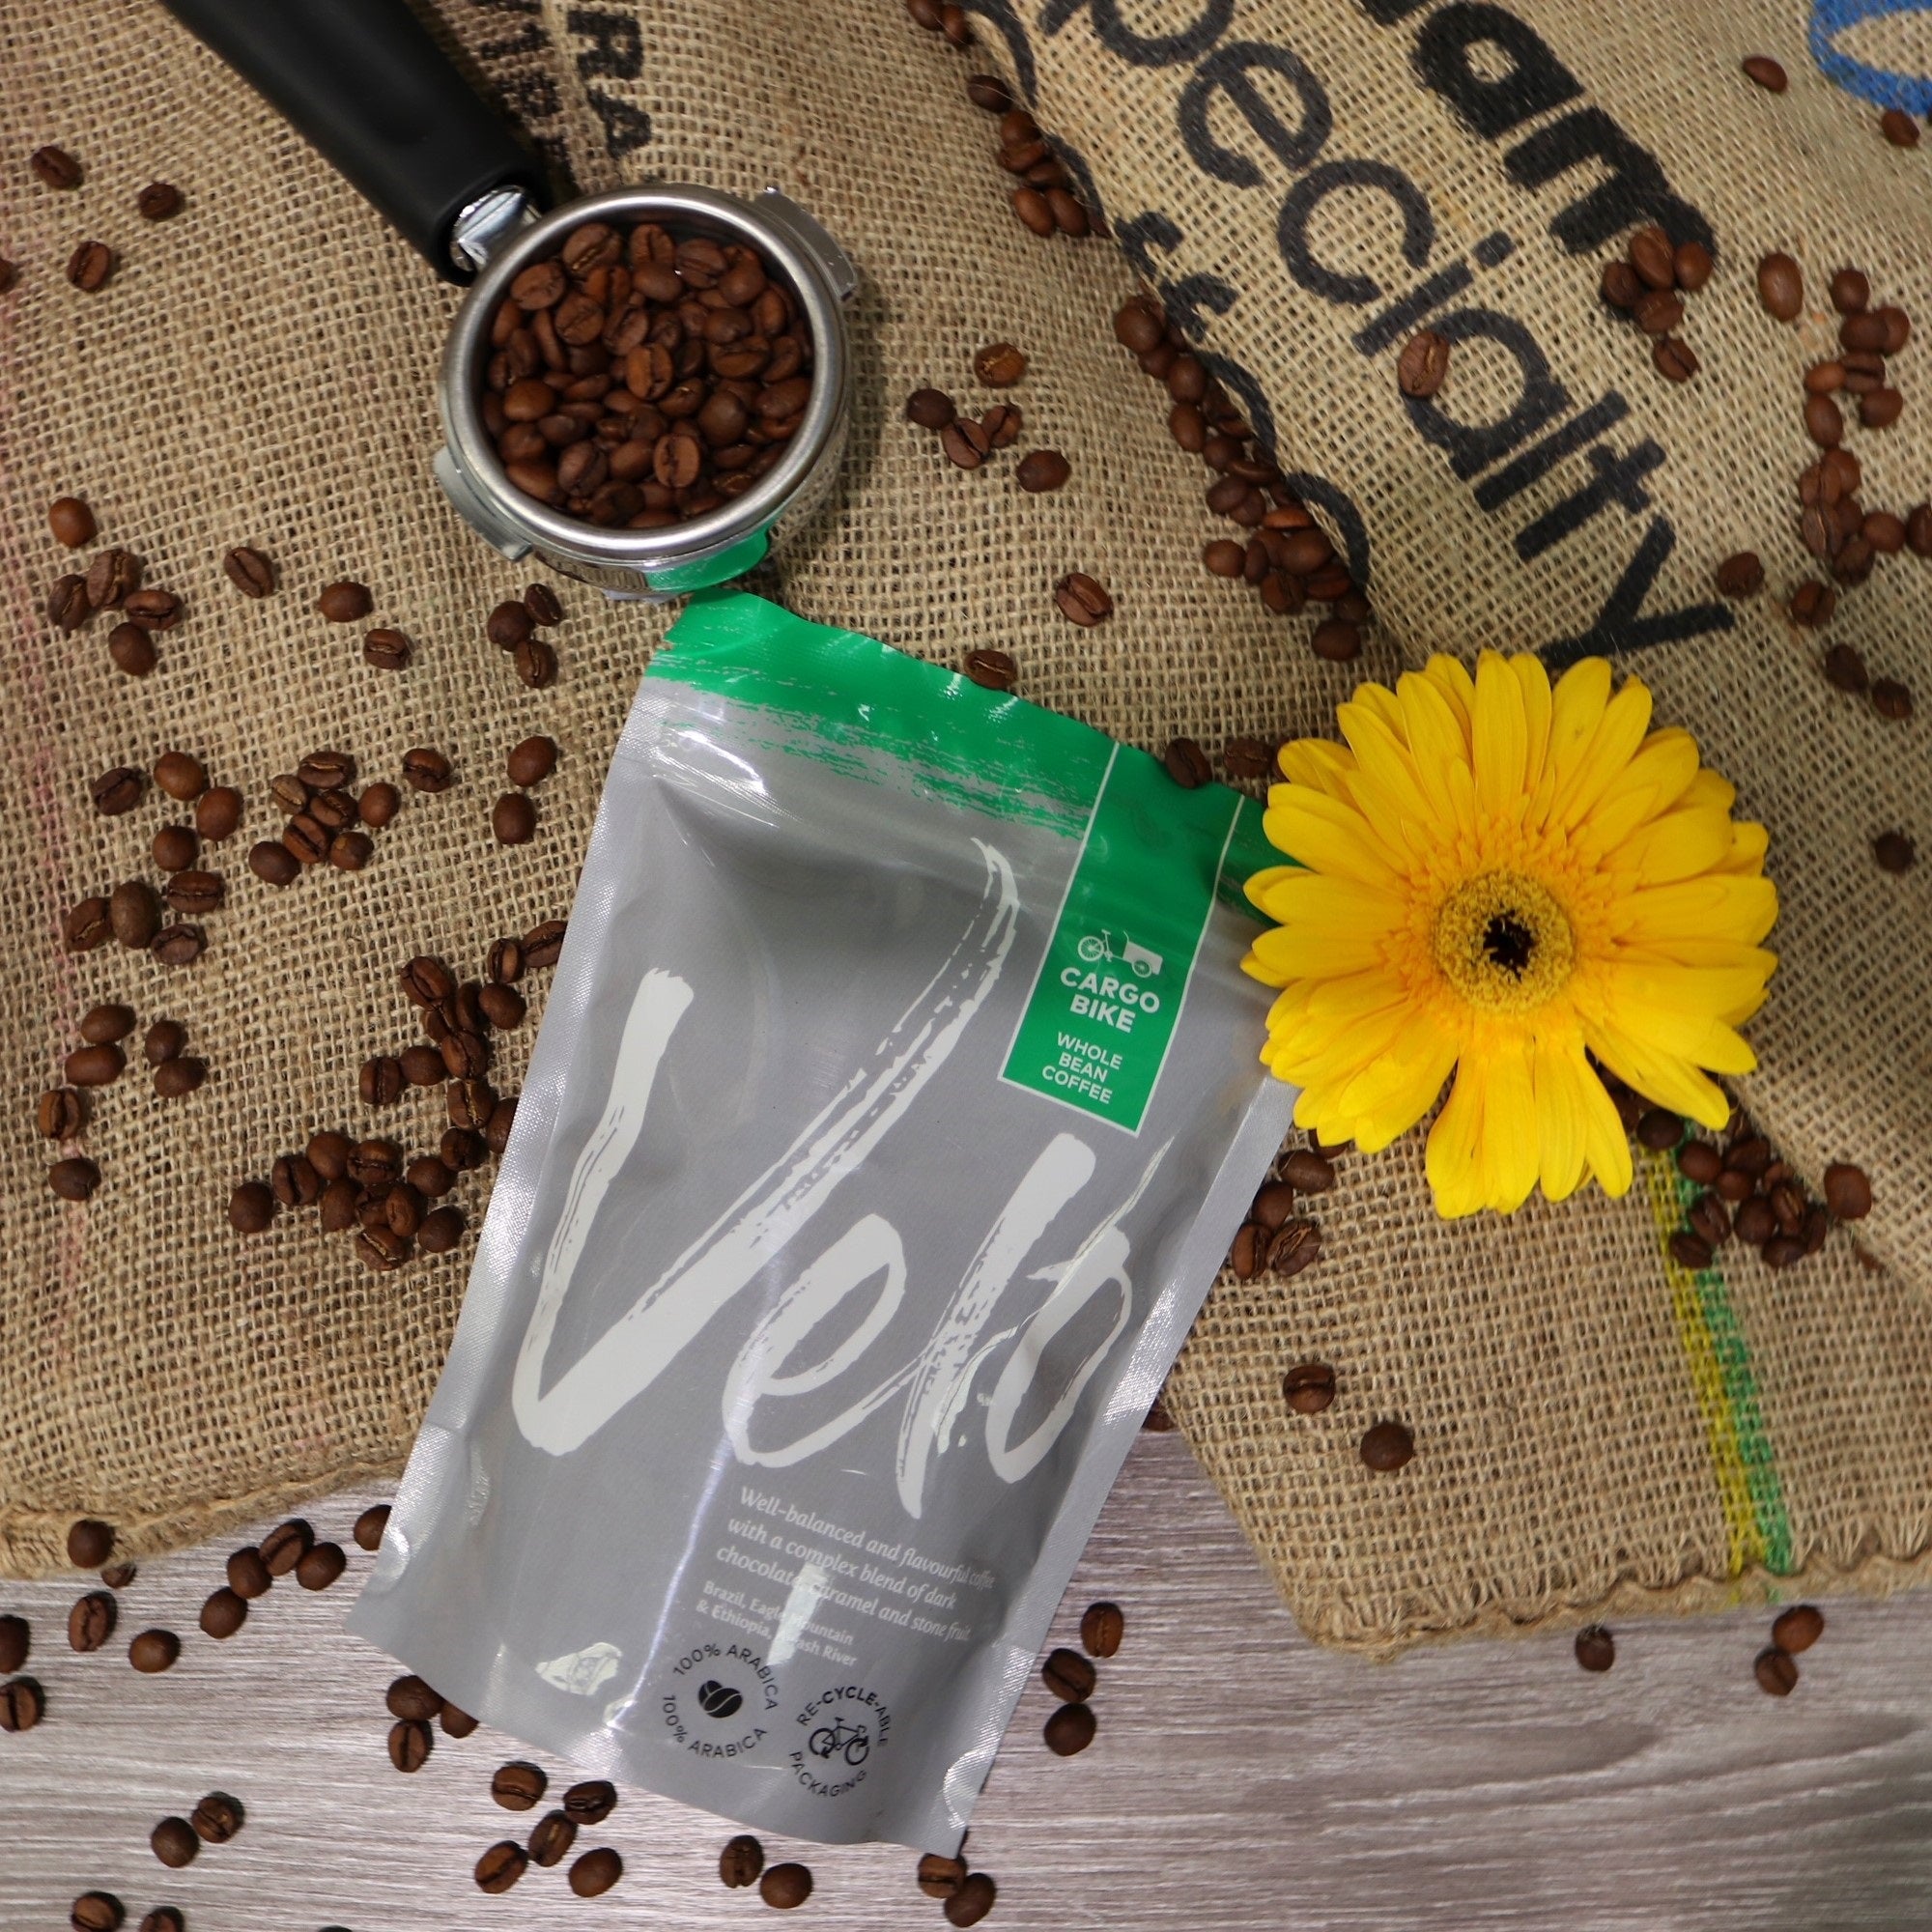 Velo Coffee Roasters - Cargo Bike 200g Coffee Bag Brazil and Ethiopia Coffee Blend - Grey bag with Green Strip across Top - Velo Coffee Roasters